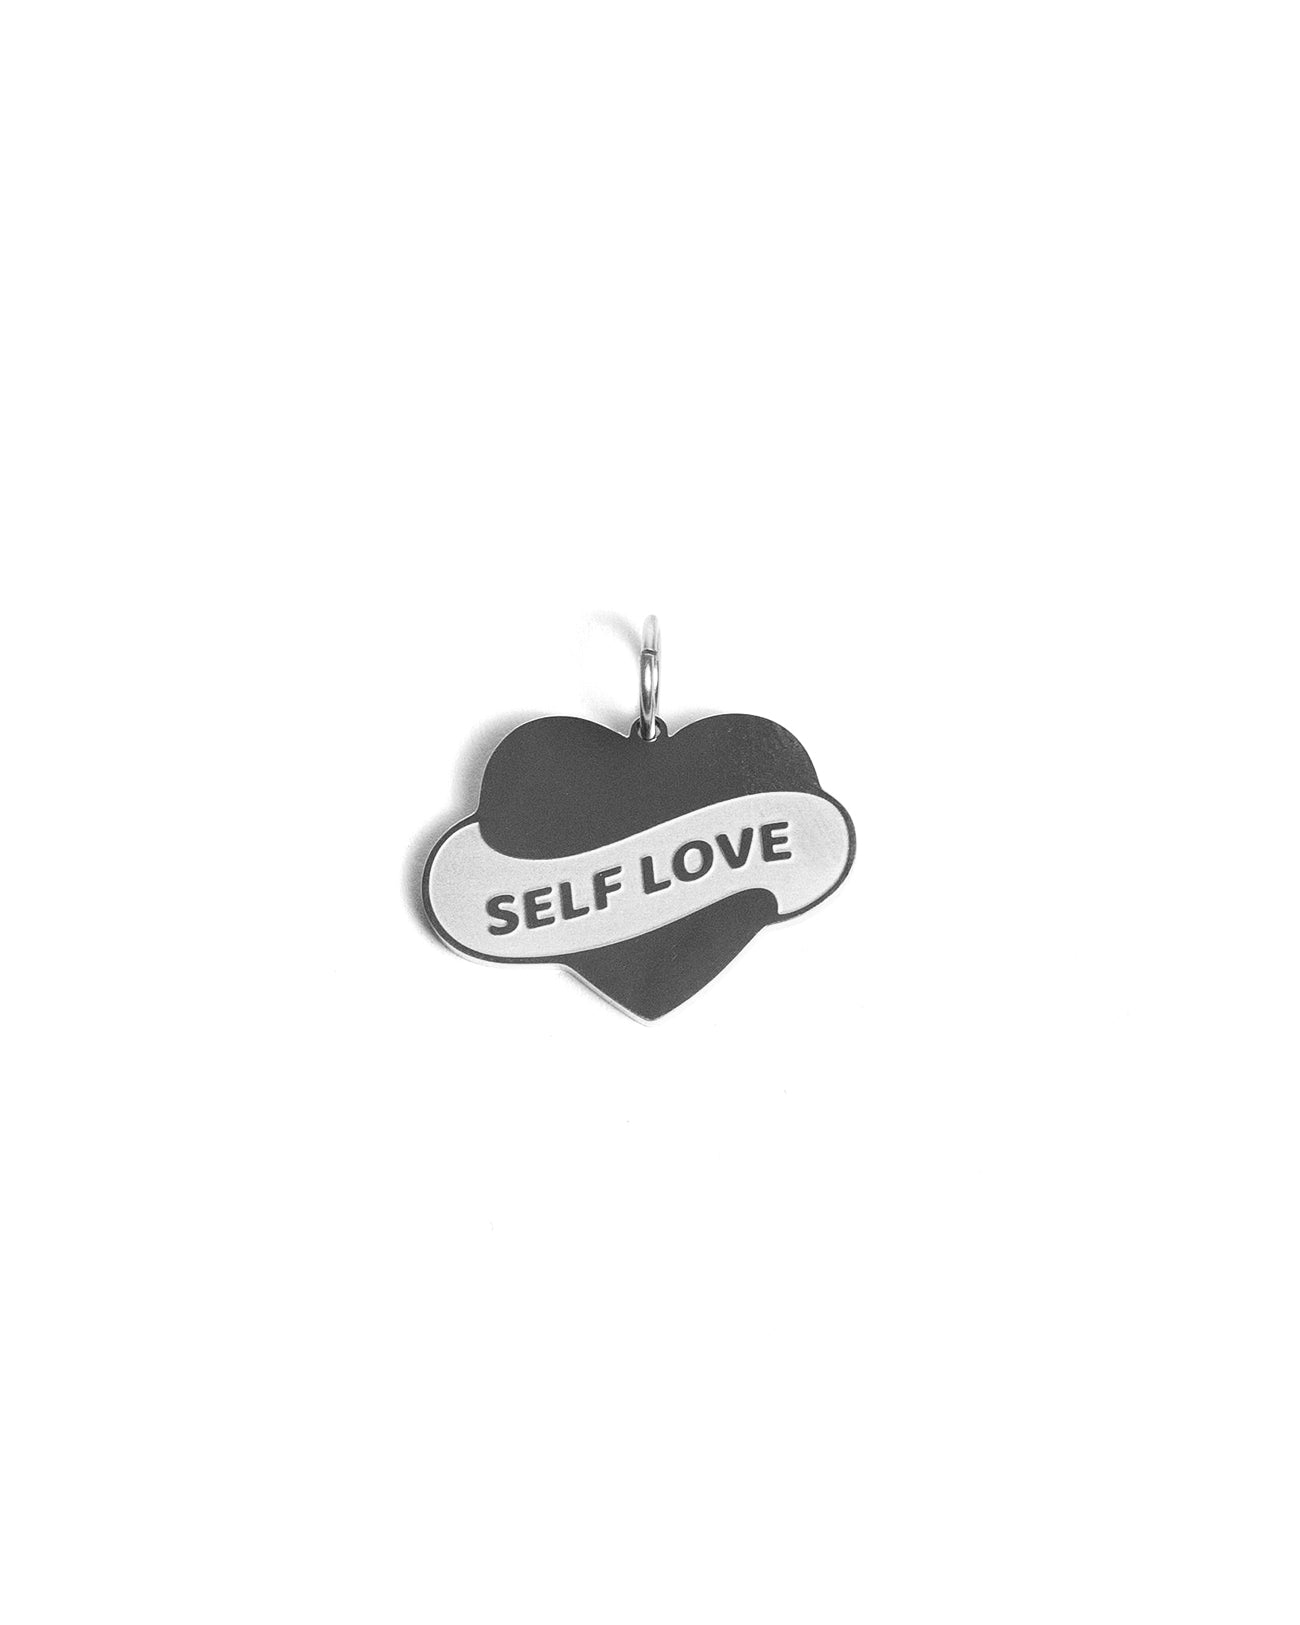 Self Love (Pendant)